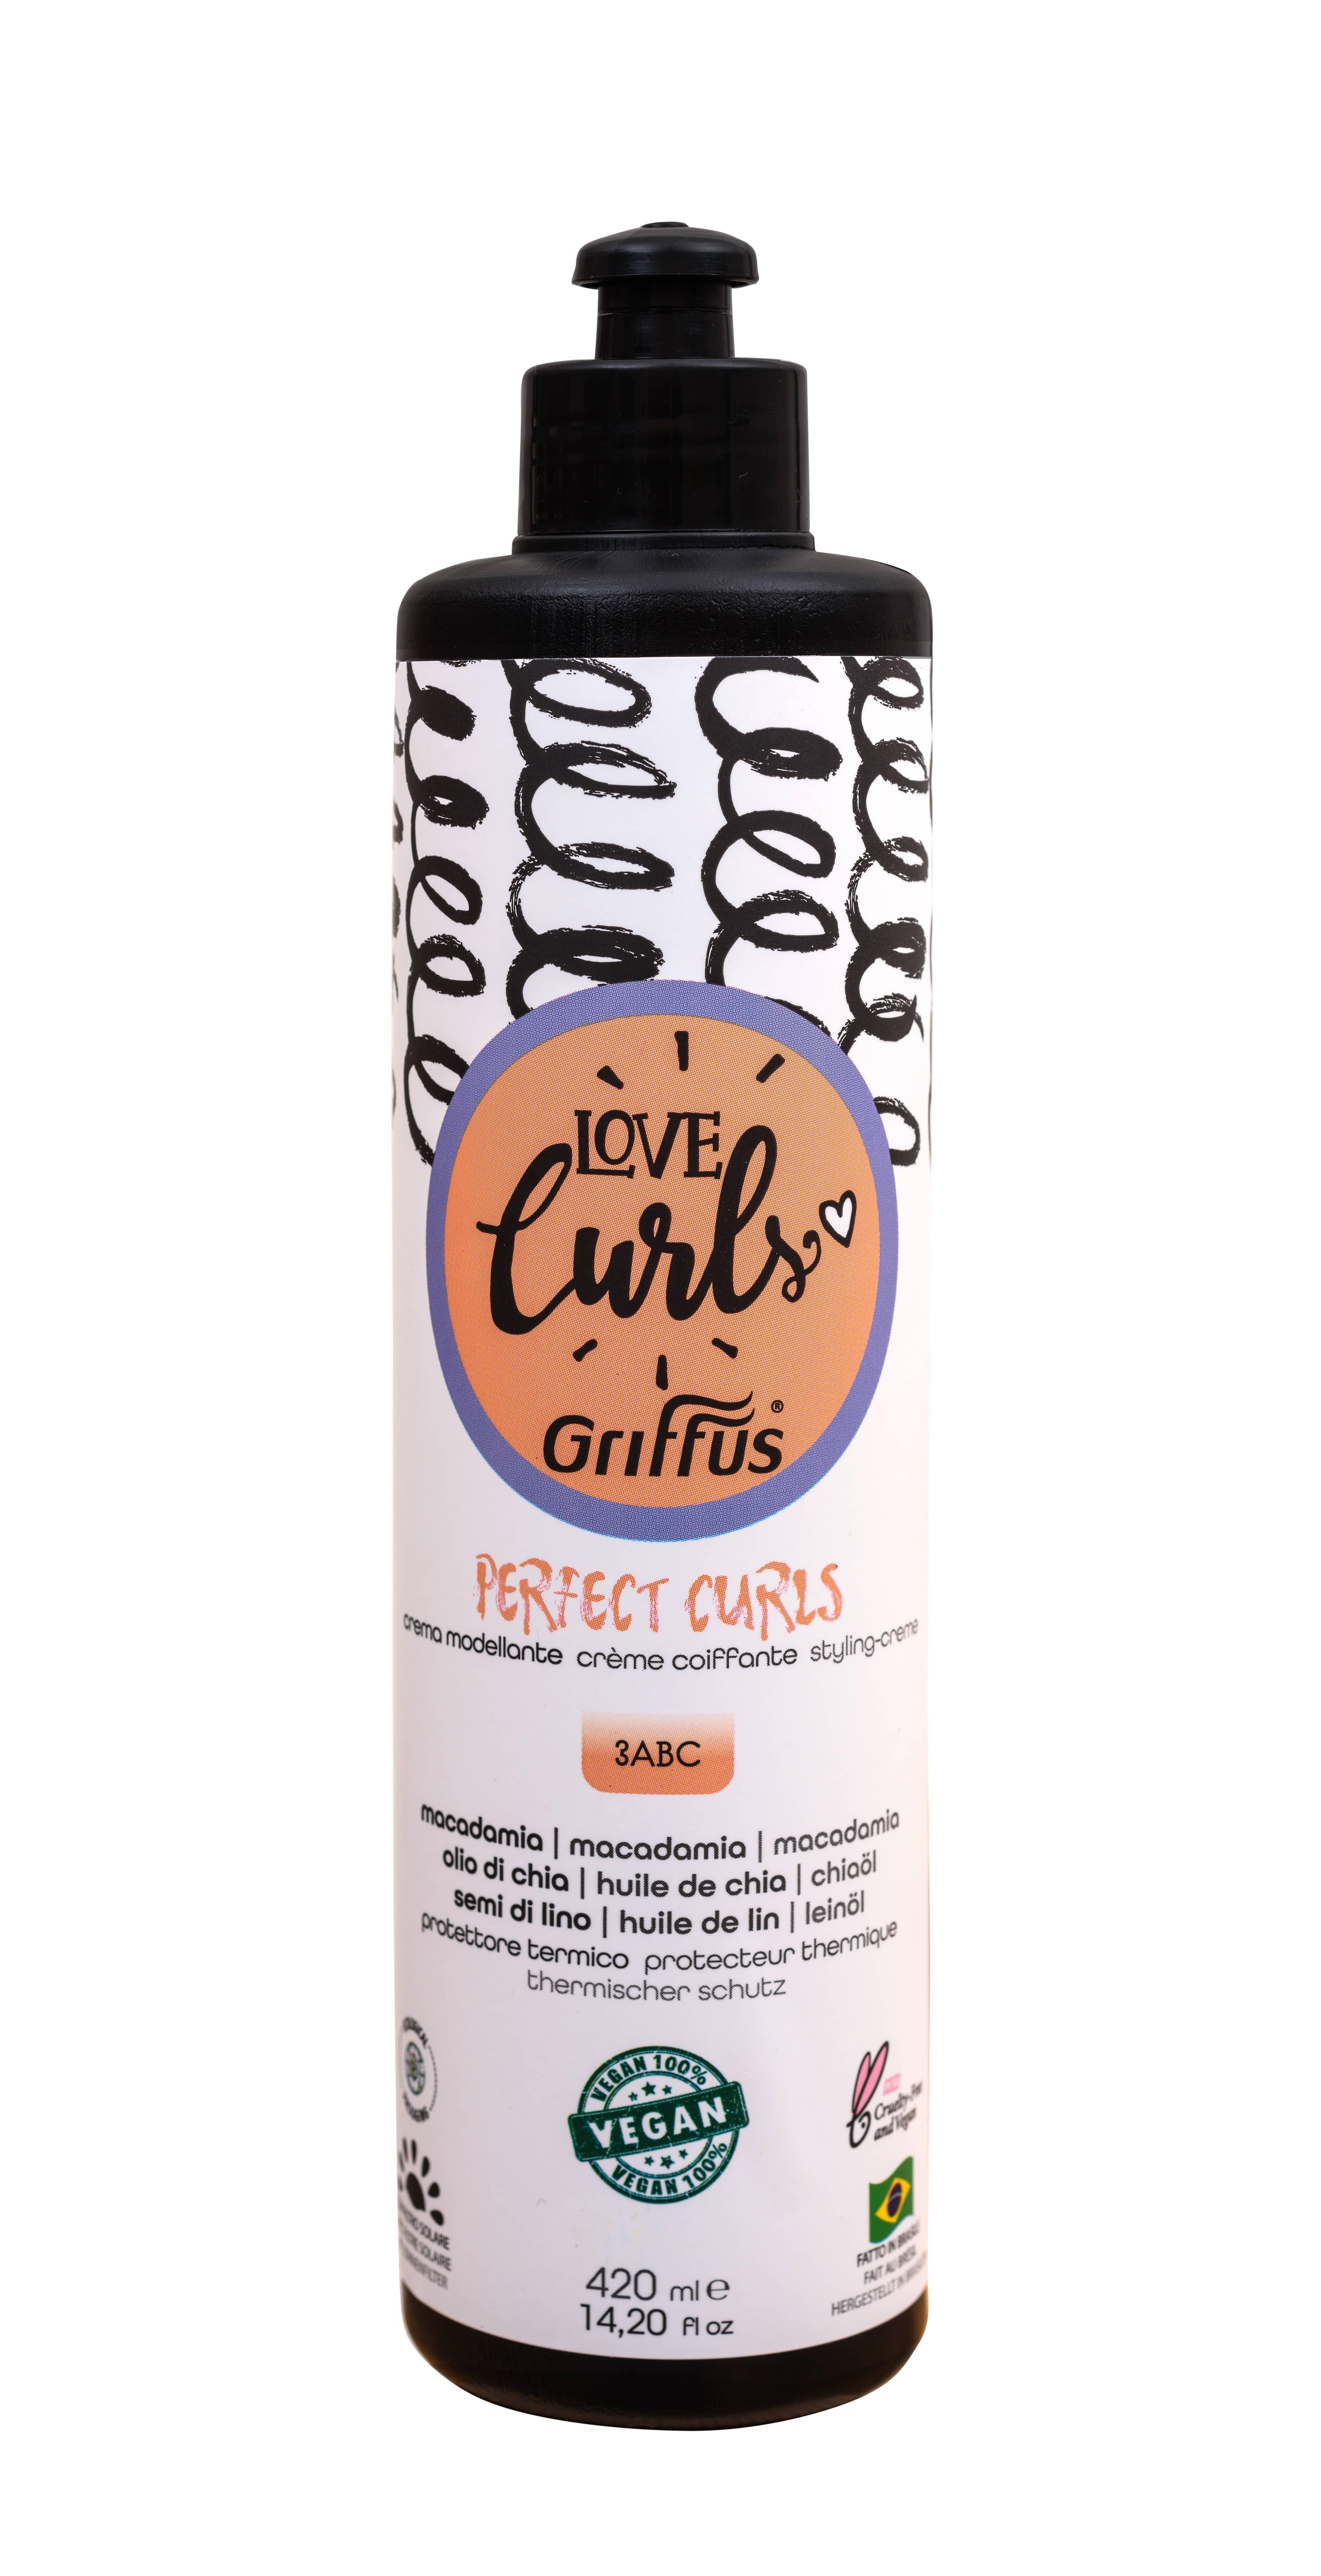 Griffus  Griffus Love Curls Perfect Curls Crema Modellante 420 ML 3ABC 